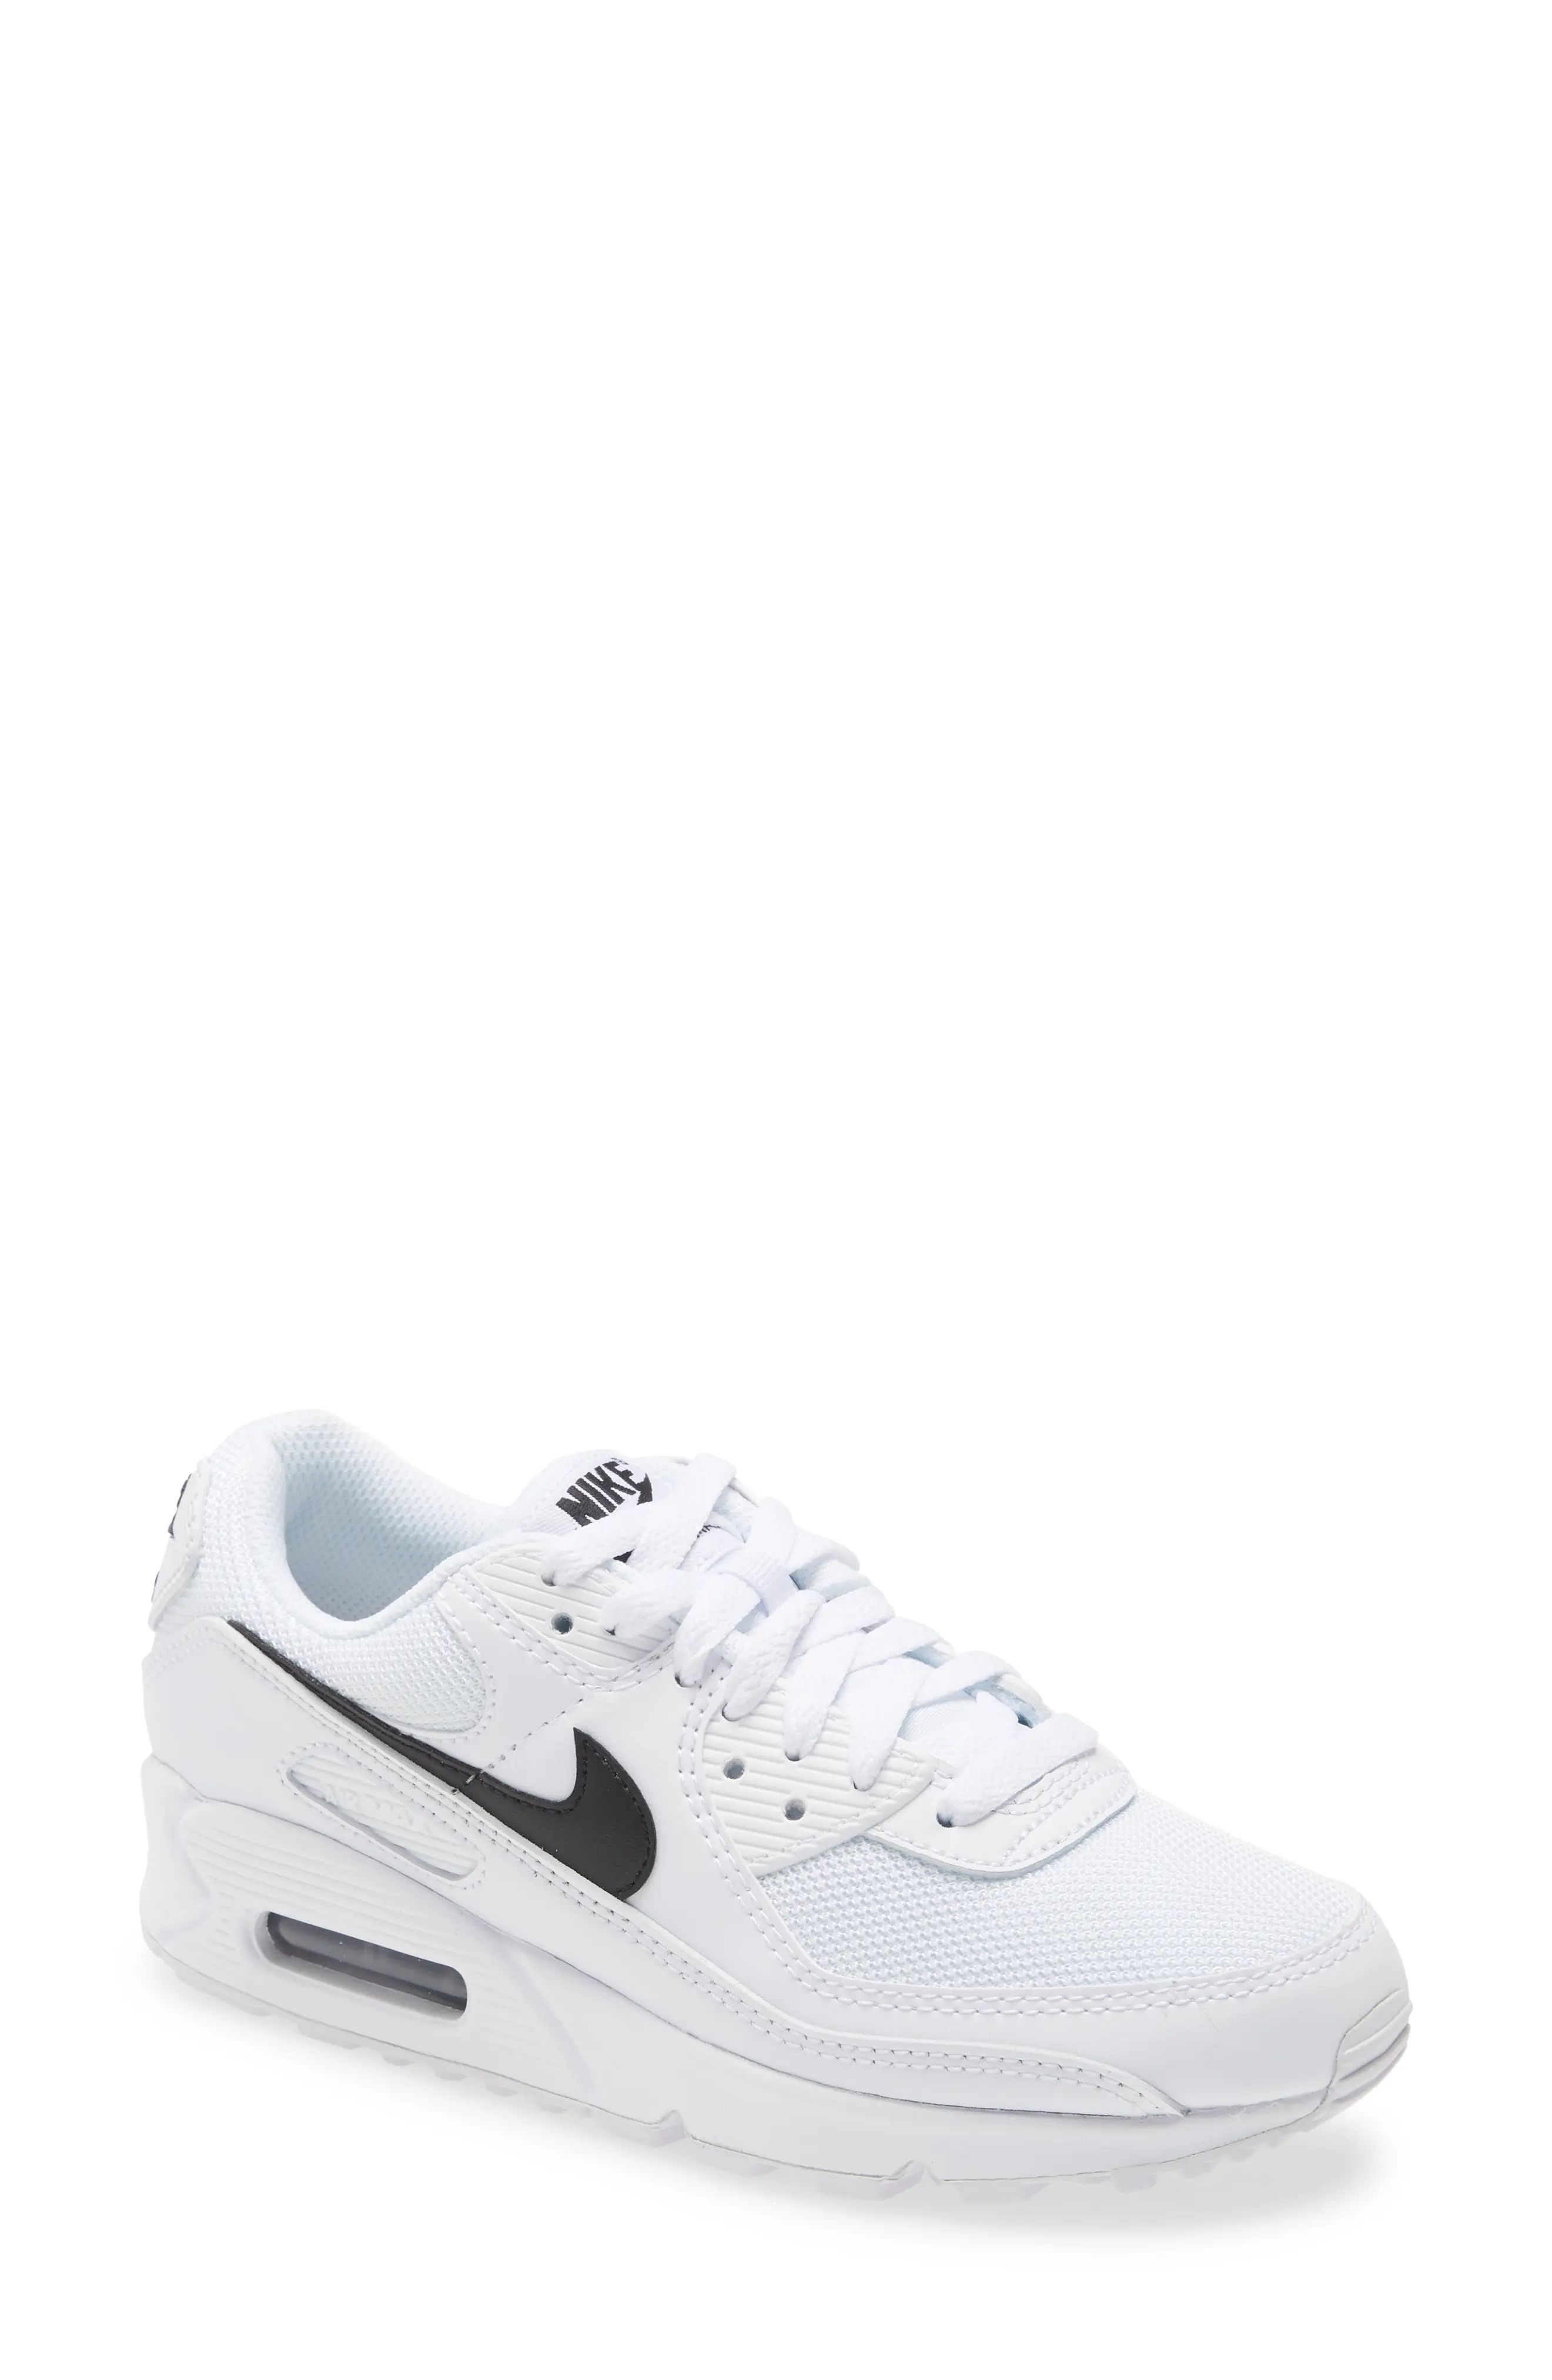 Nike Air Max 90 Sneaker in White/Black/White at Nordstrom, Size 6 | Nordstrom